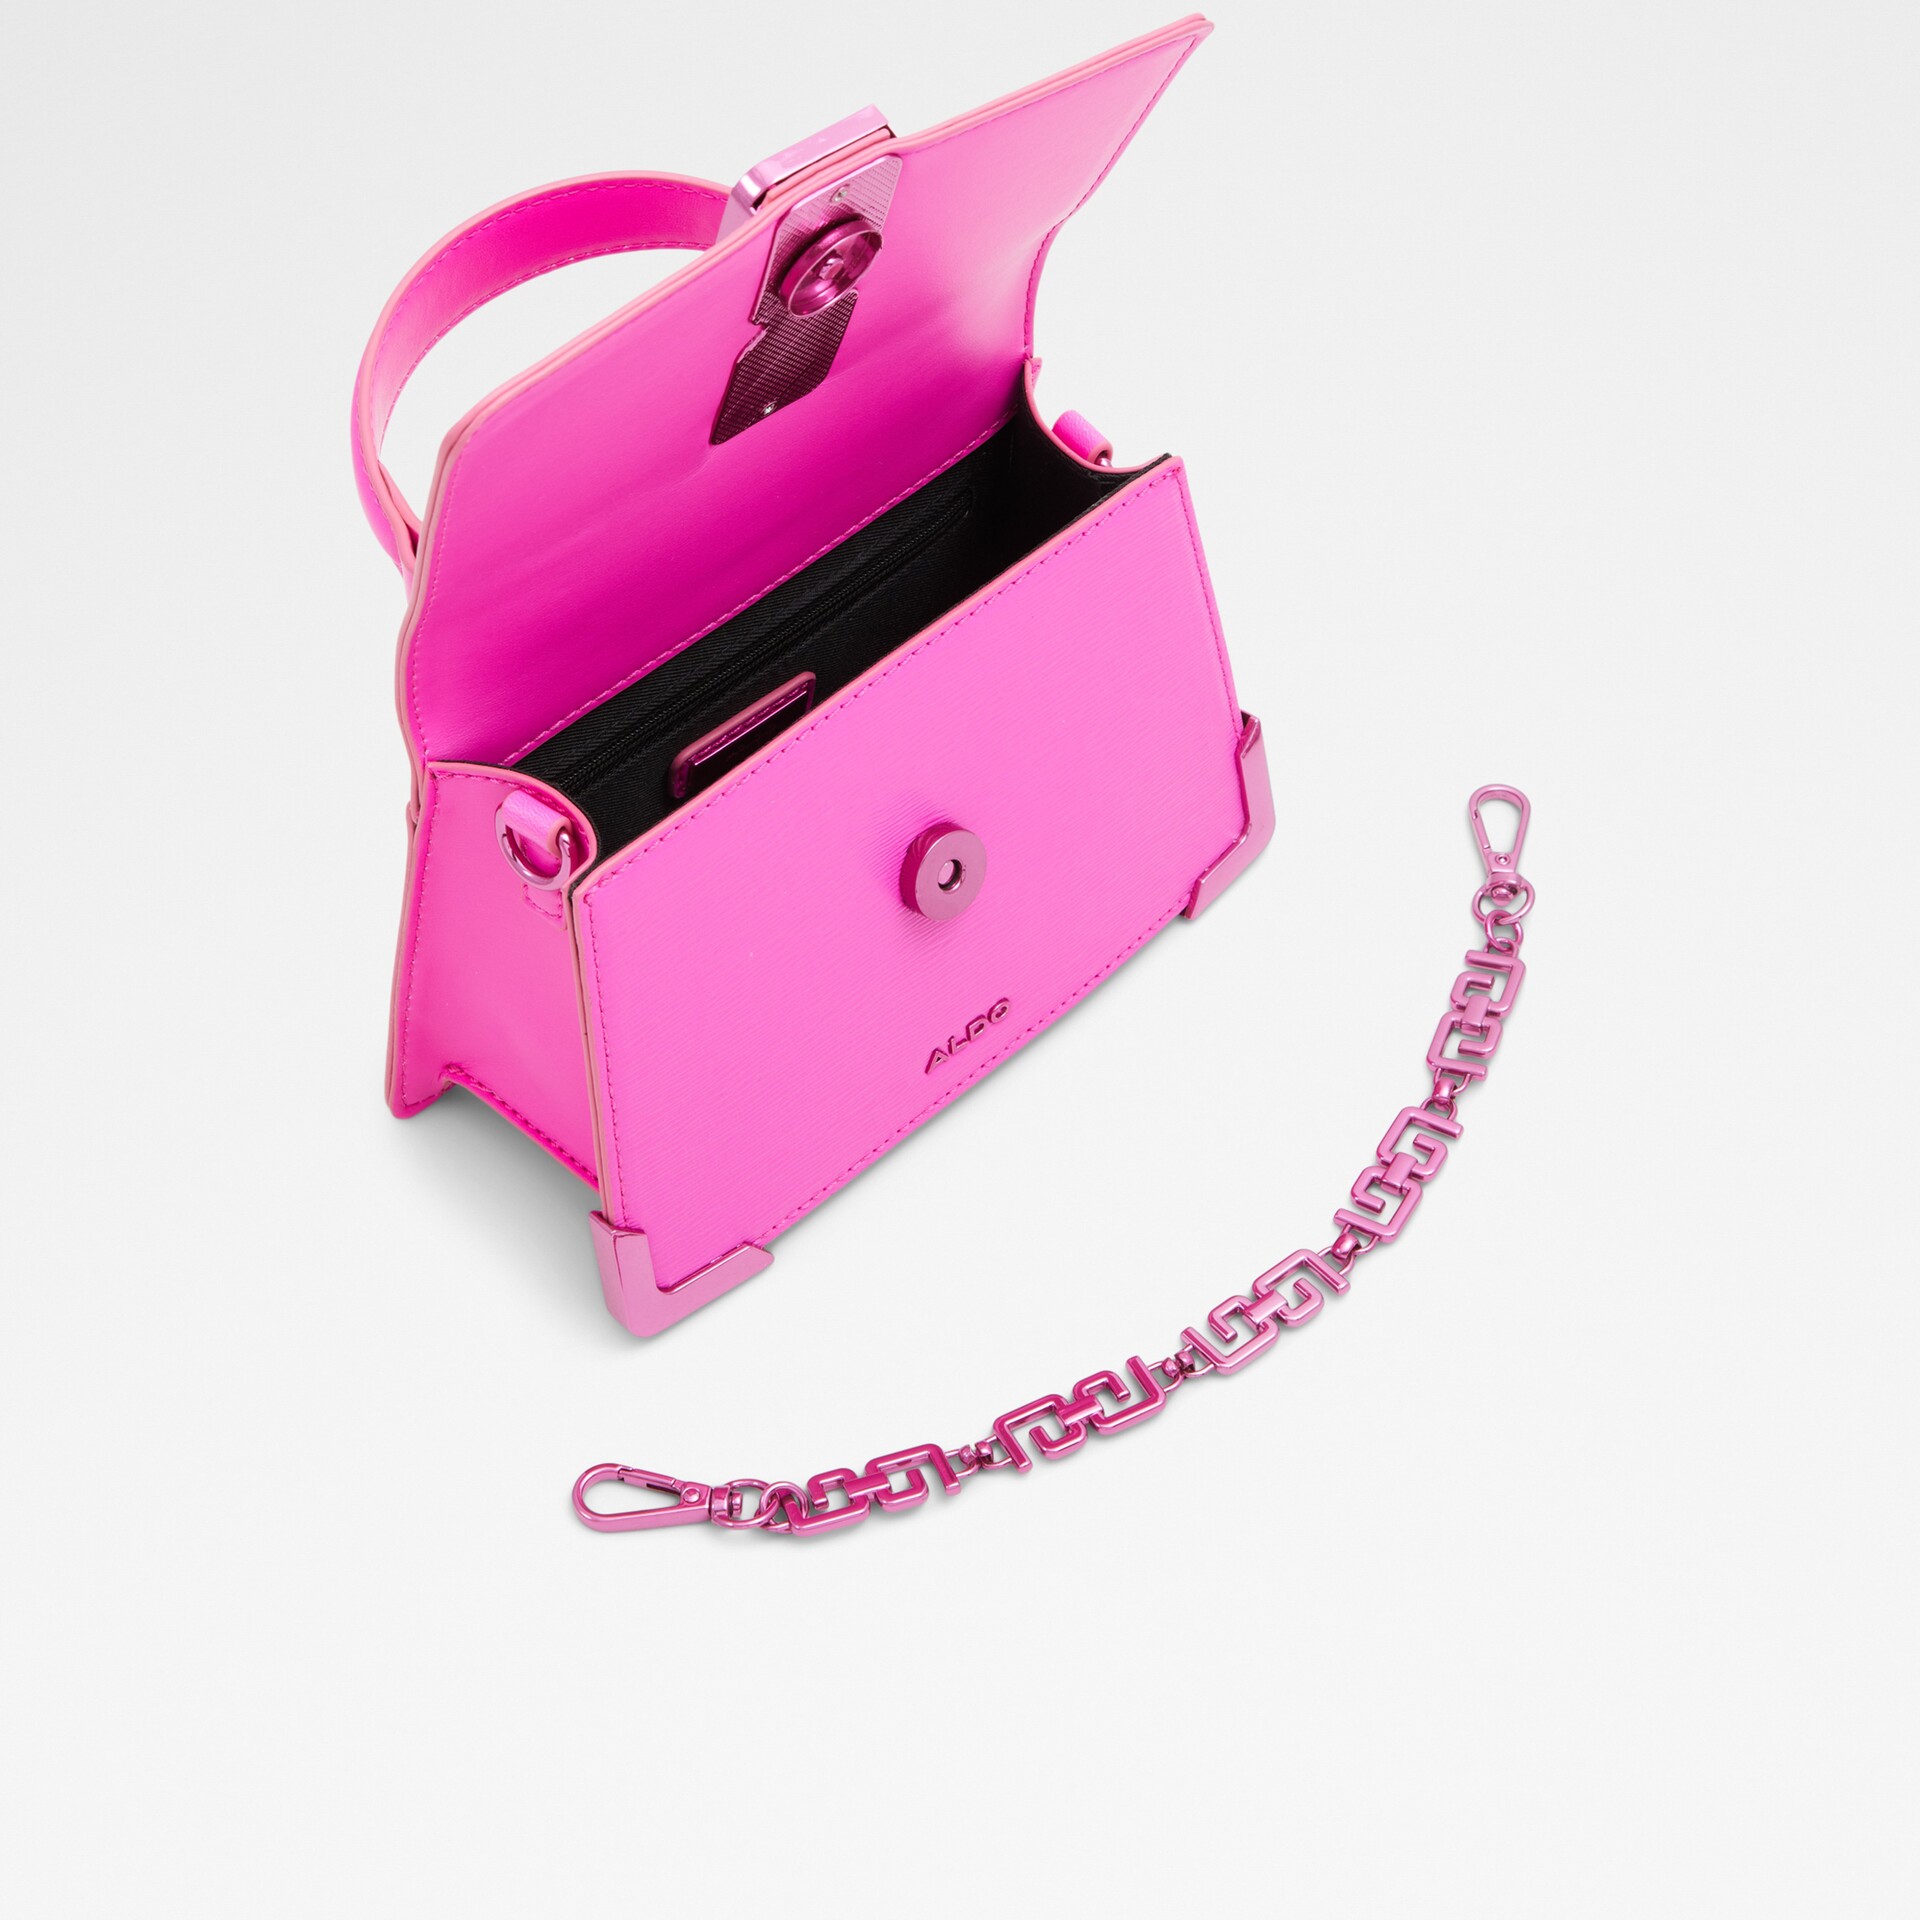 Woman handbag in fuchsia pink - AUSSEY652002029 | ALDO Cyprus